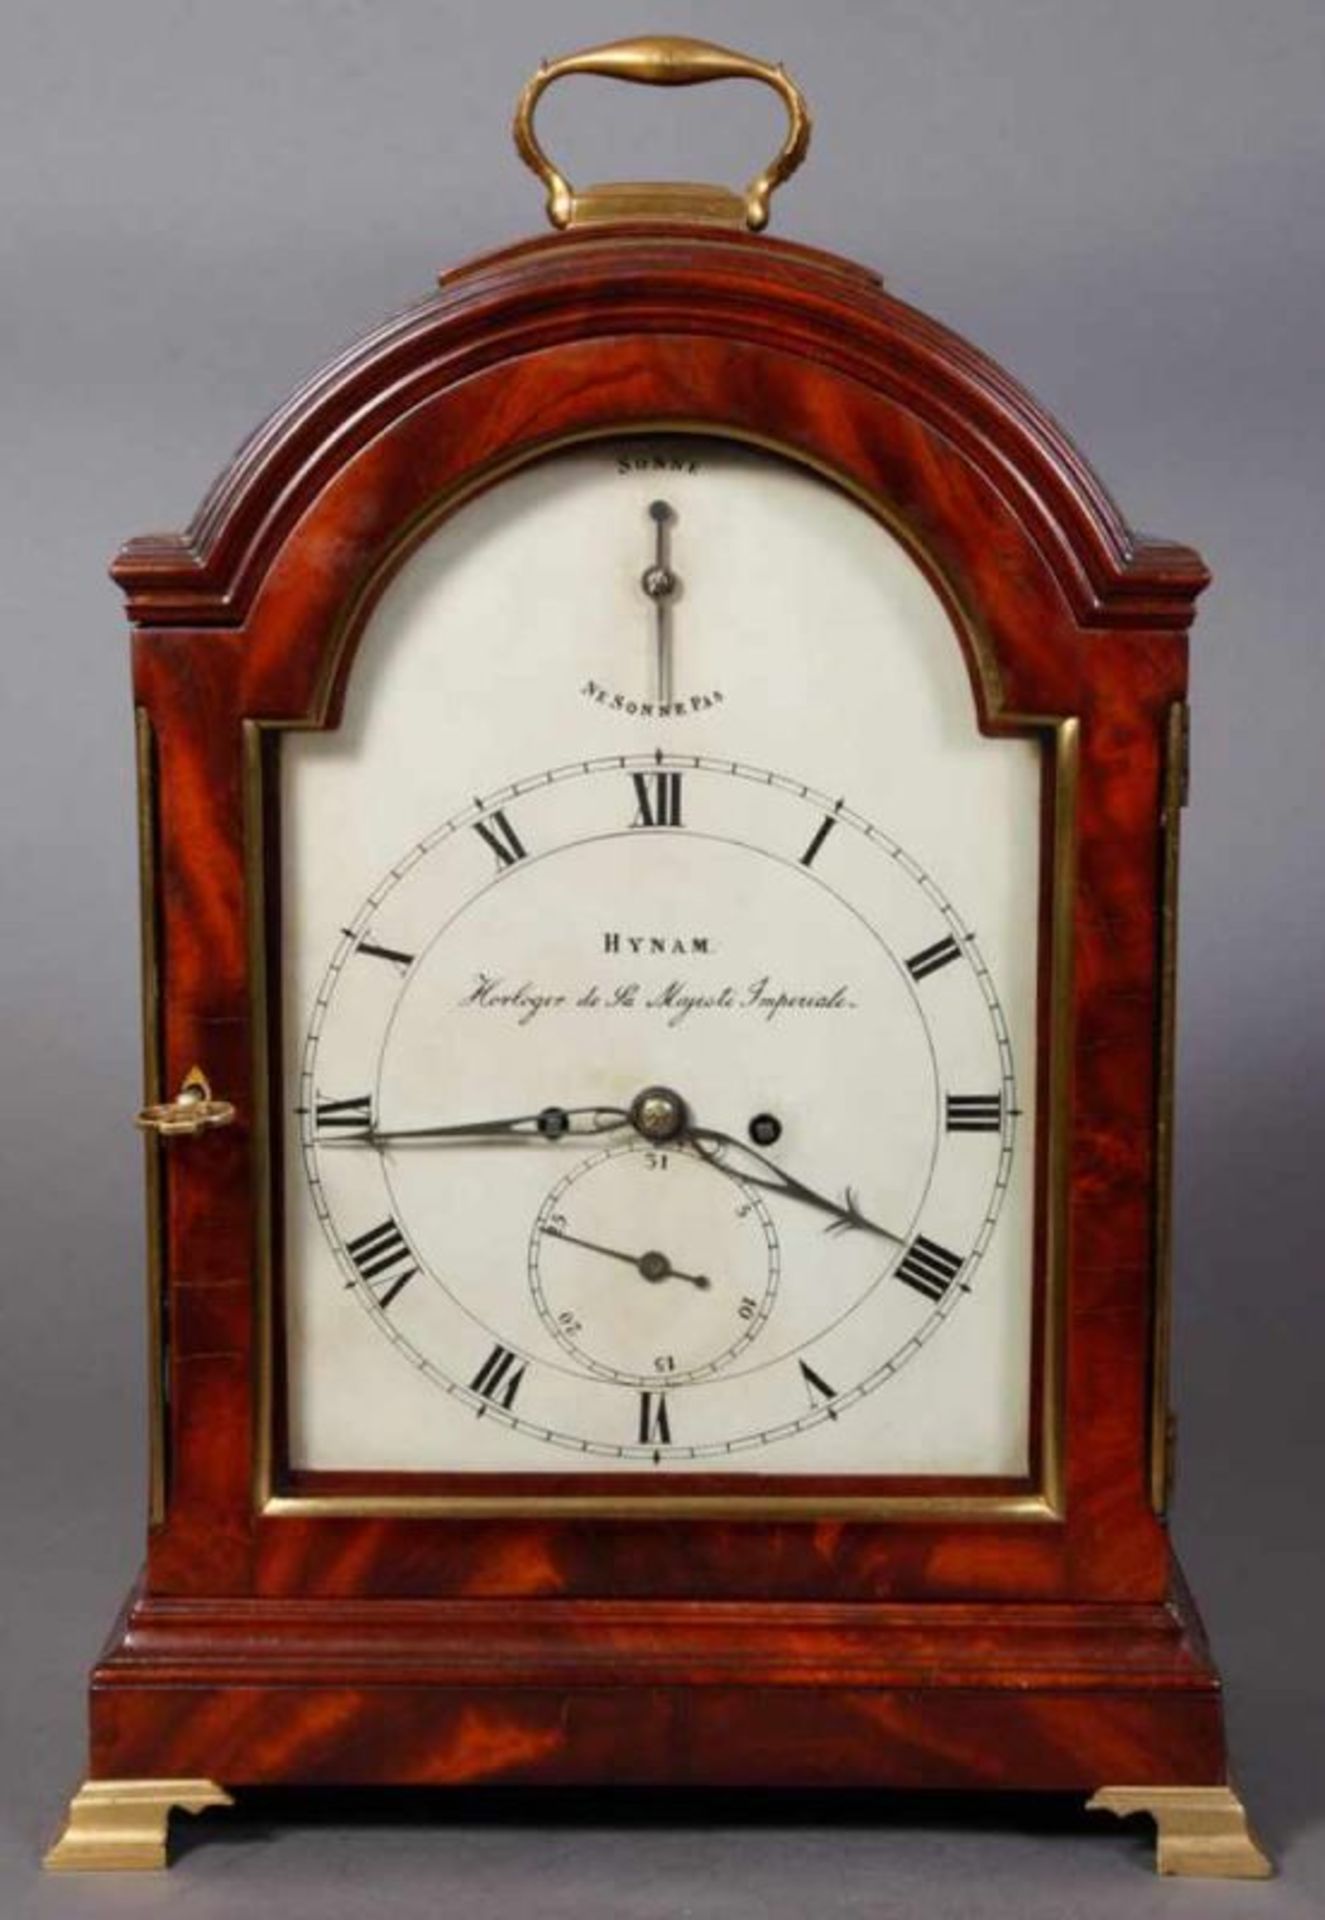 Bracket-Clock des ROBERT HYNAM (England 1735 oder ´37 - 1817 Sankt Petersburg). Er war als Uhrmacher